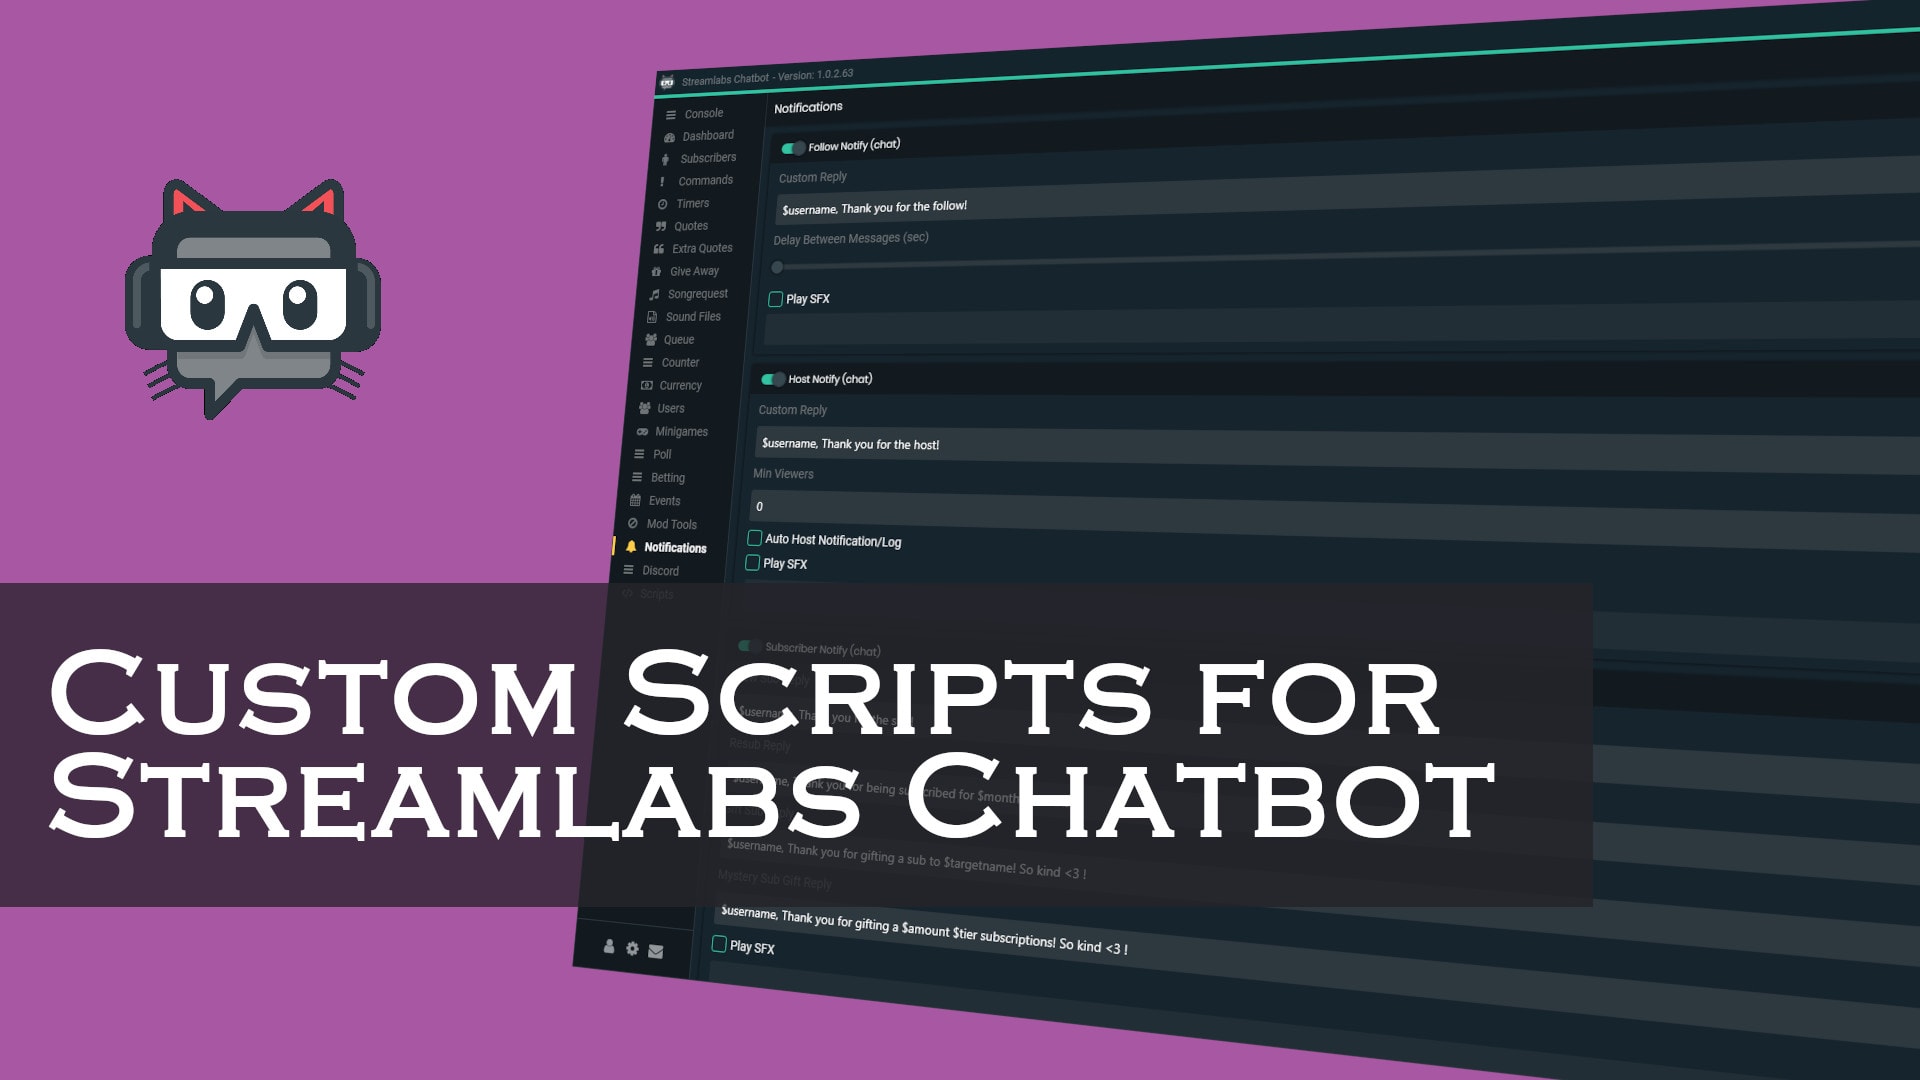 Develop scripts for streamlabs chatbot Zensmann | Fiverr